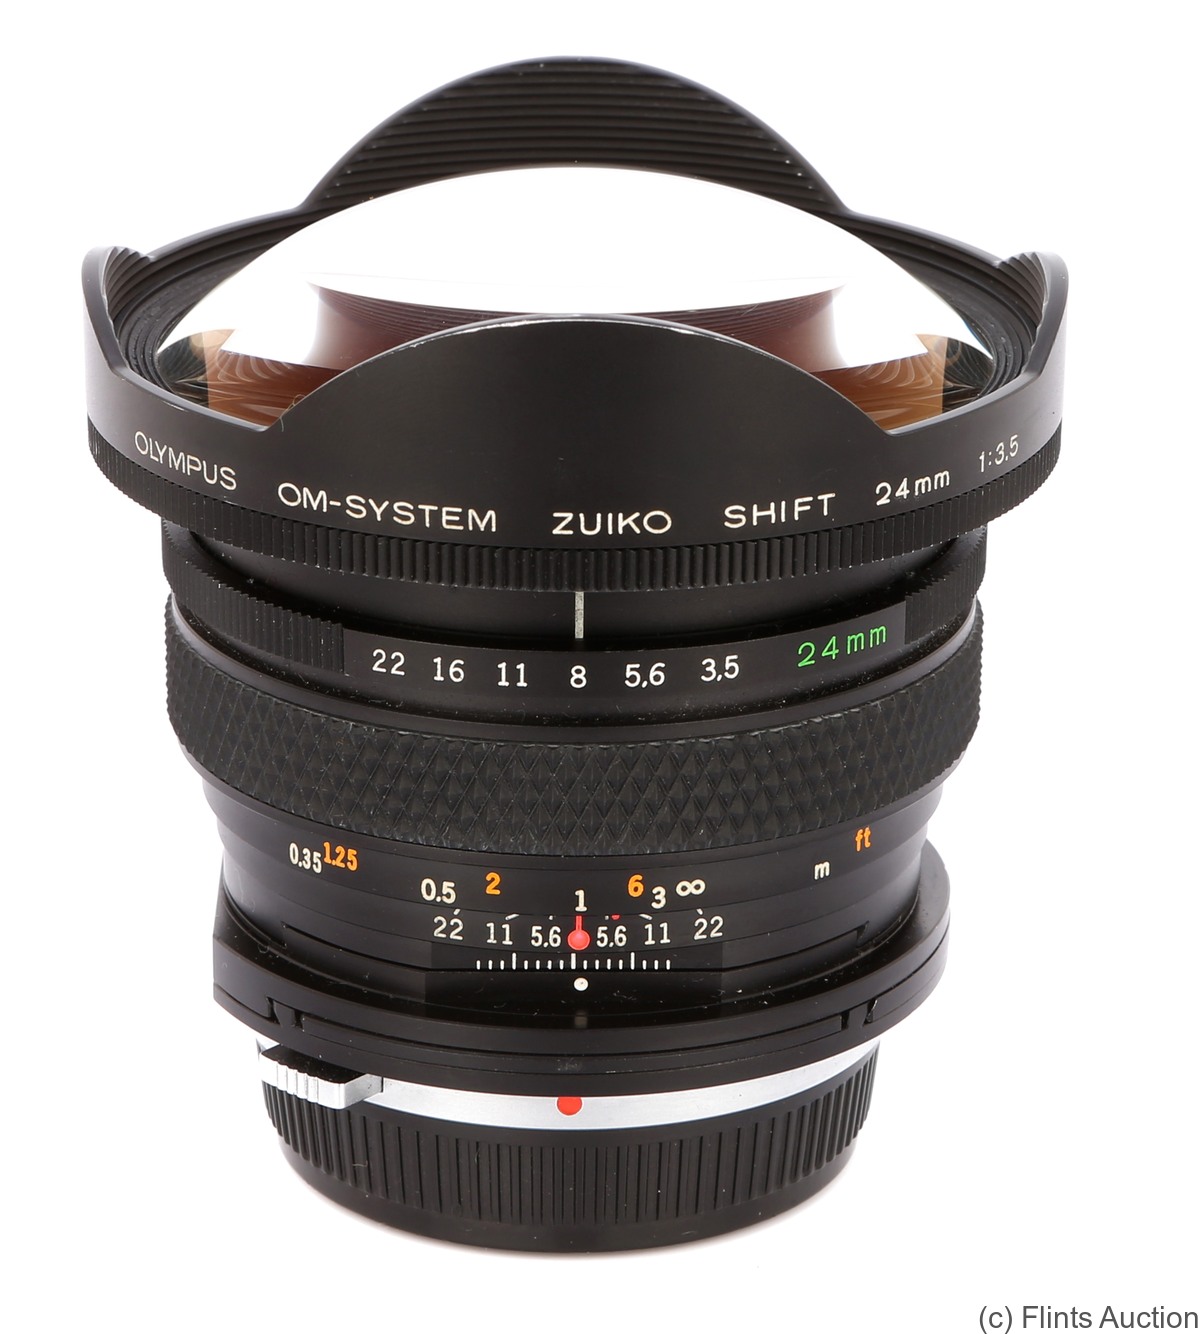 Olympus: 24mm (2.4cm) f3.5 Zuiko Shift (OM) camera